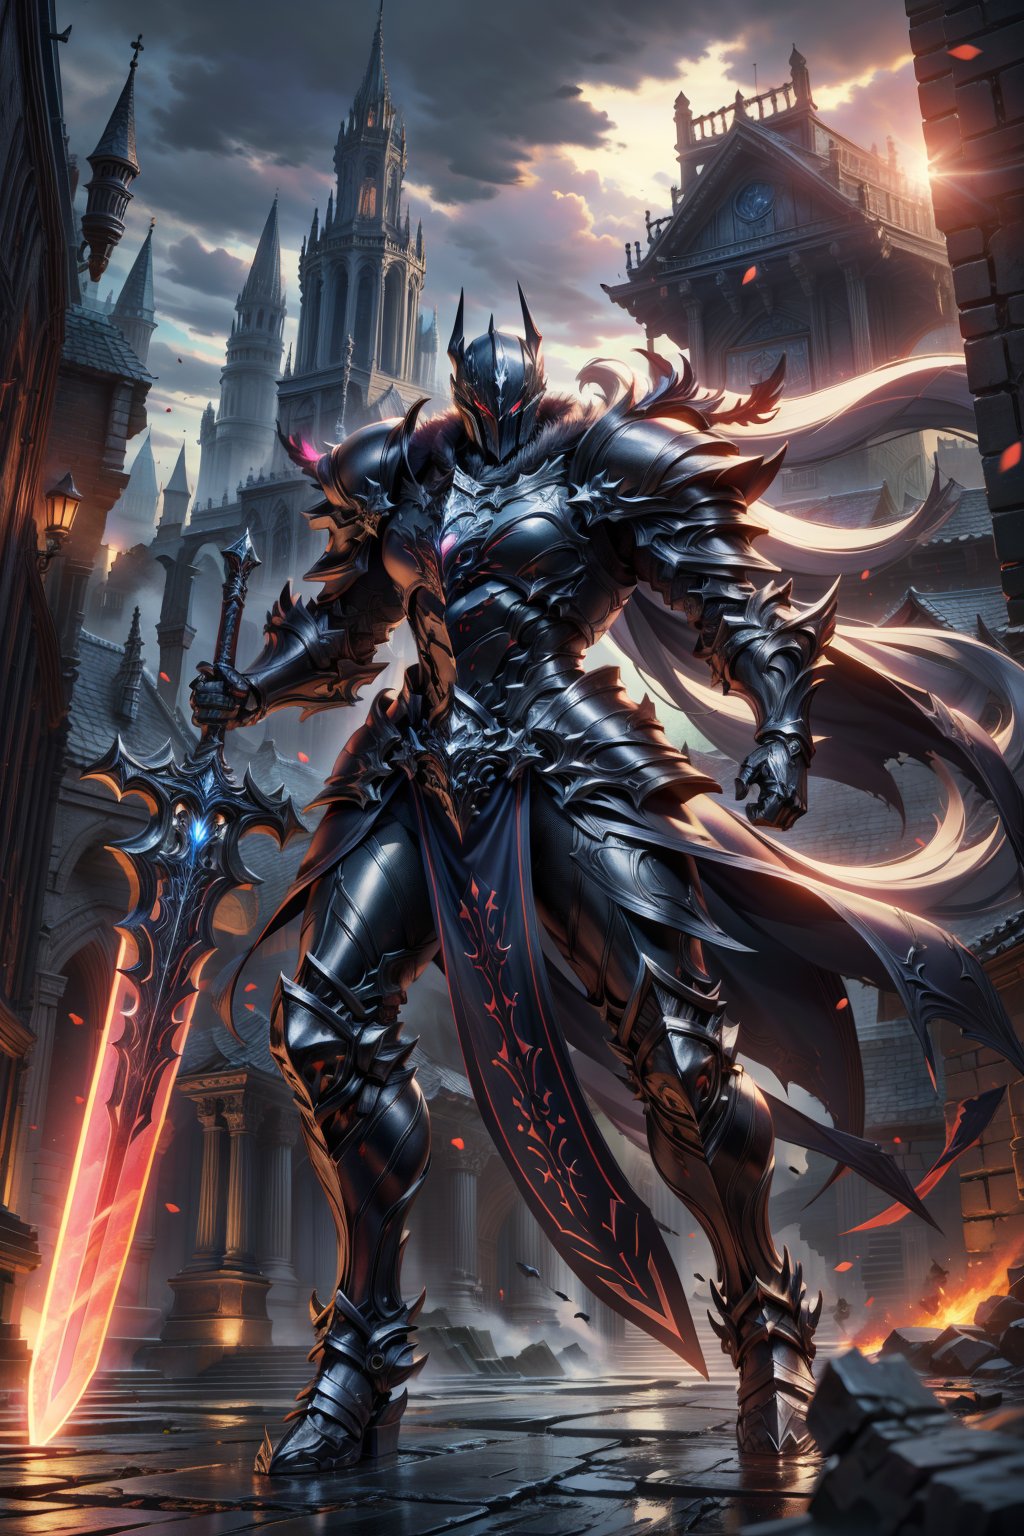 Action shot of a dark knight,dak aura armor,wielding  giant dark aura sword,castle, masterpiece,best quality,high res